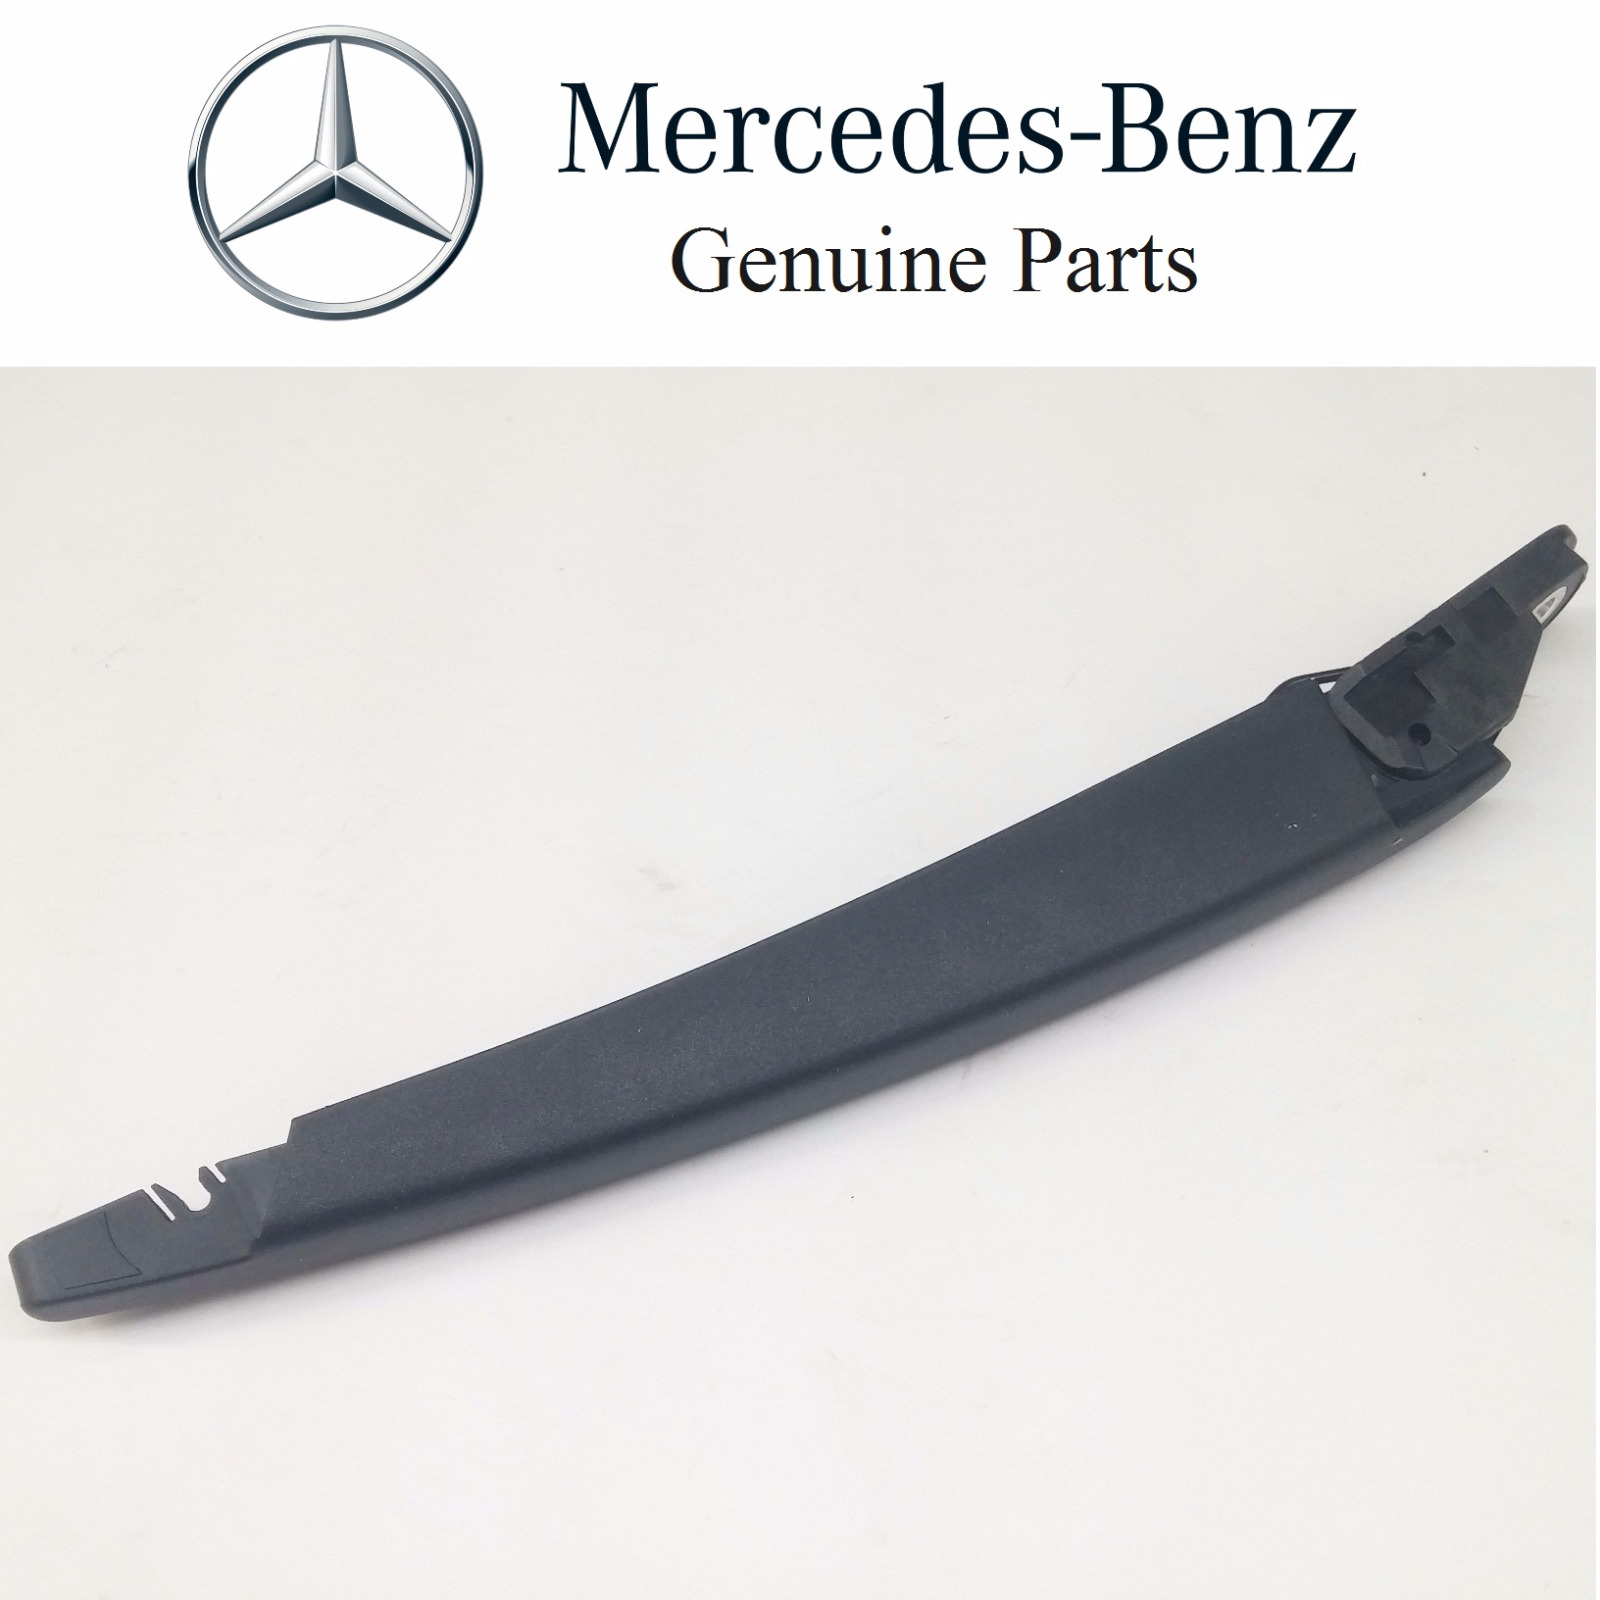 For Mercedes W164 ML320 ML550 Rear Windshield Wiper Arm Genuine 164 820 07 44